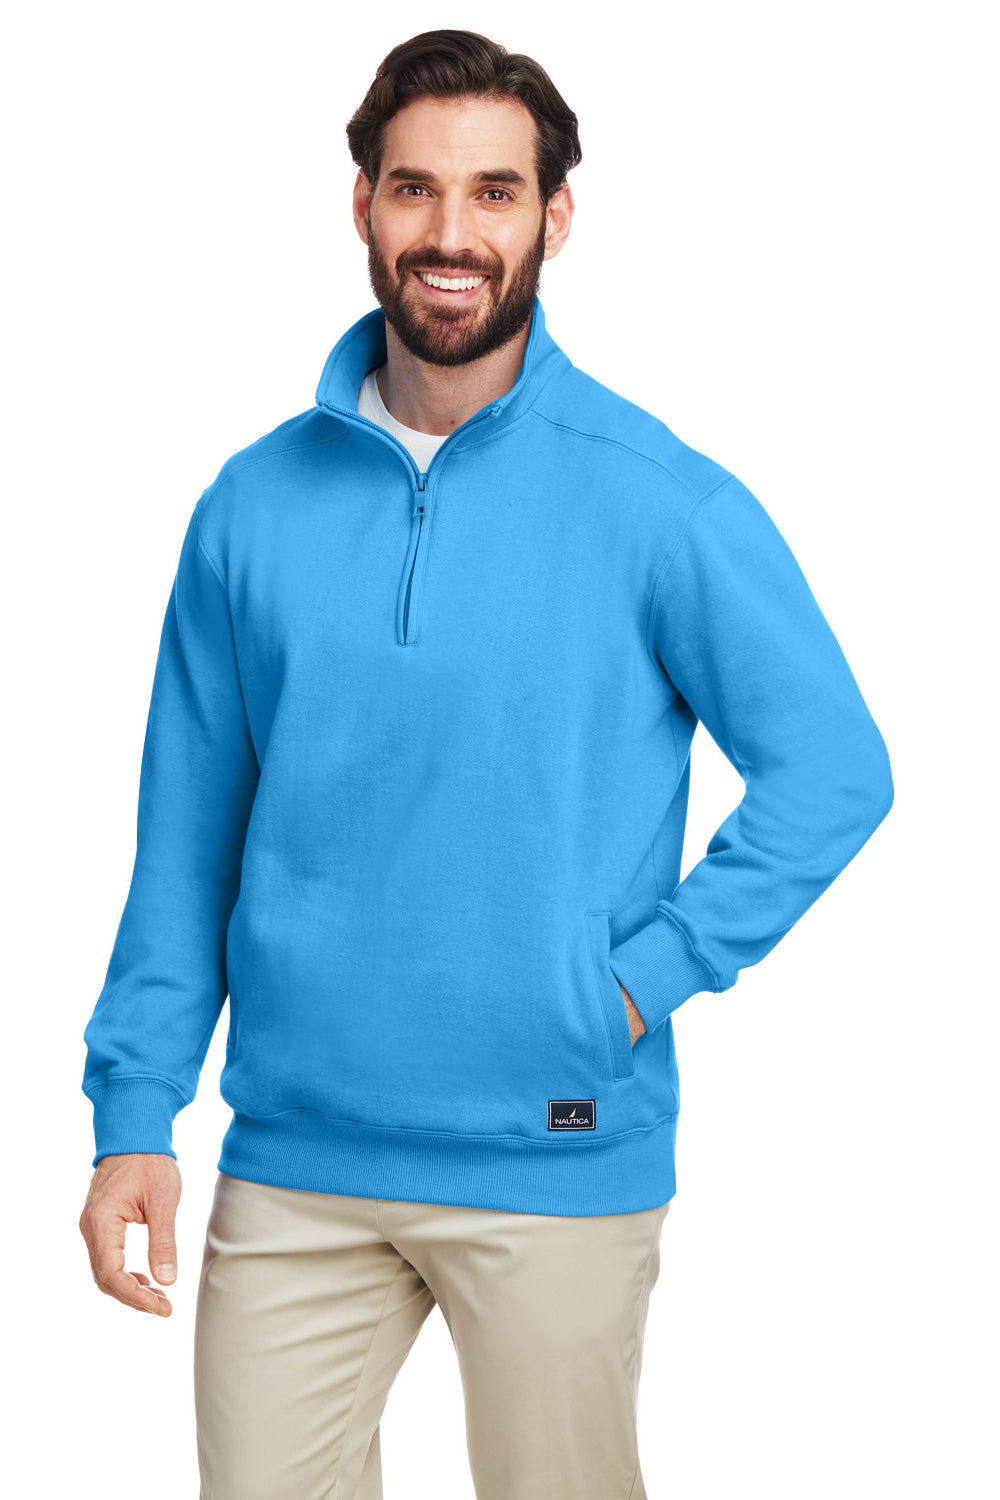 Nautica N17176 Mens Anchor 1/4 Zip Sweatshirt Azure Blue 3Q